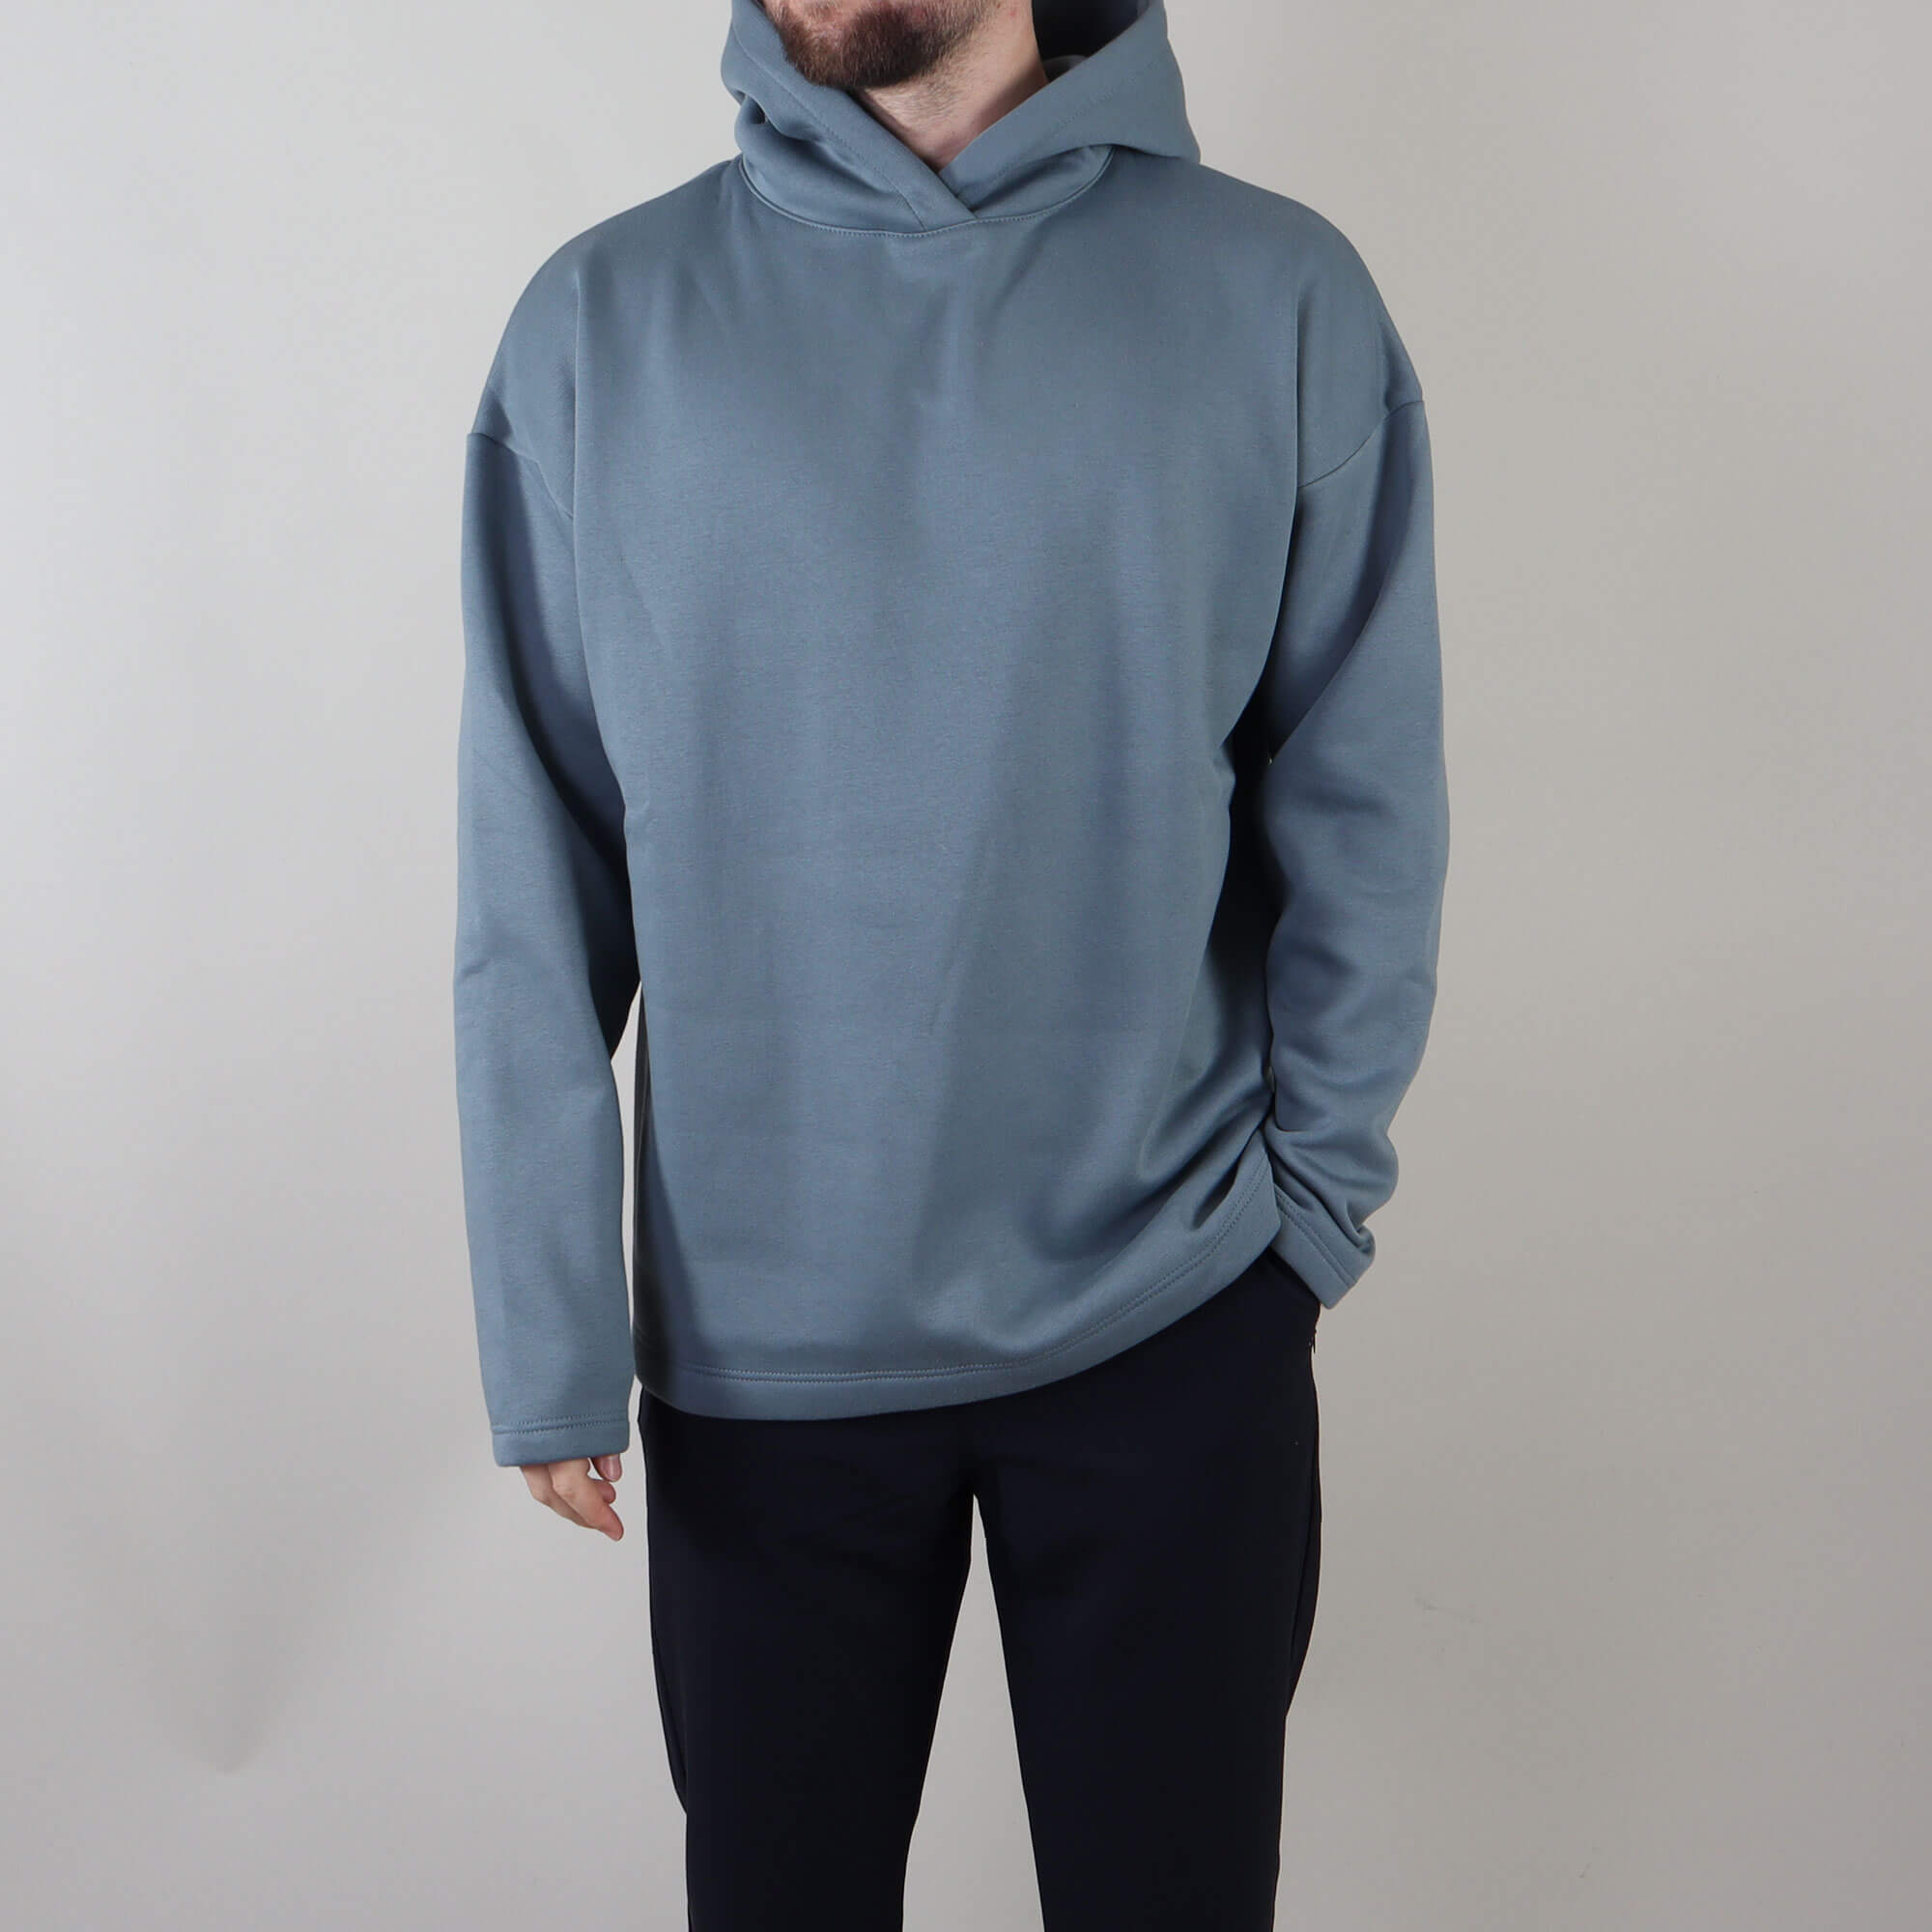 PRJCT hoodie light blue